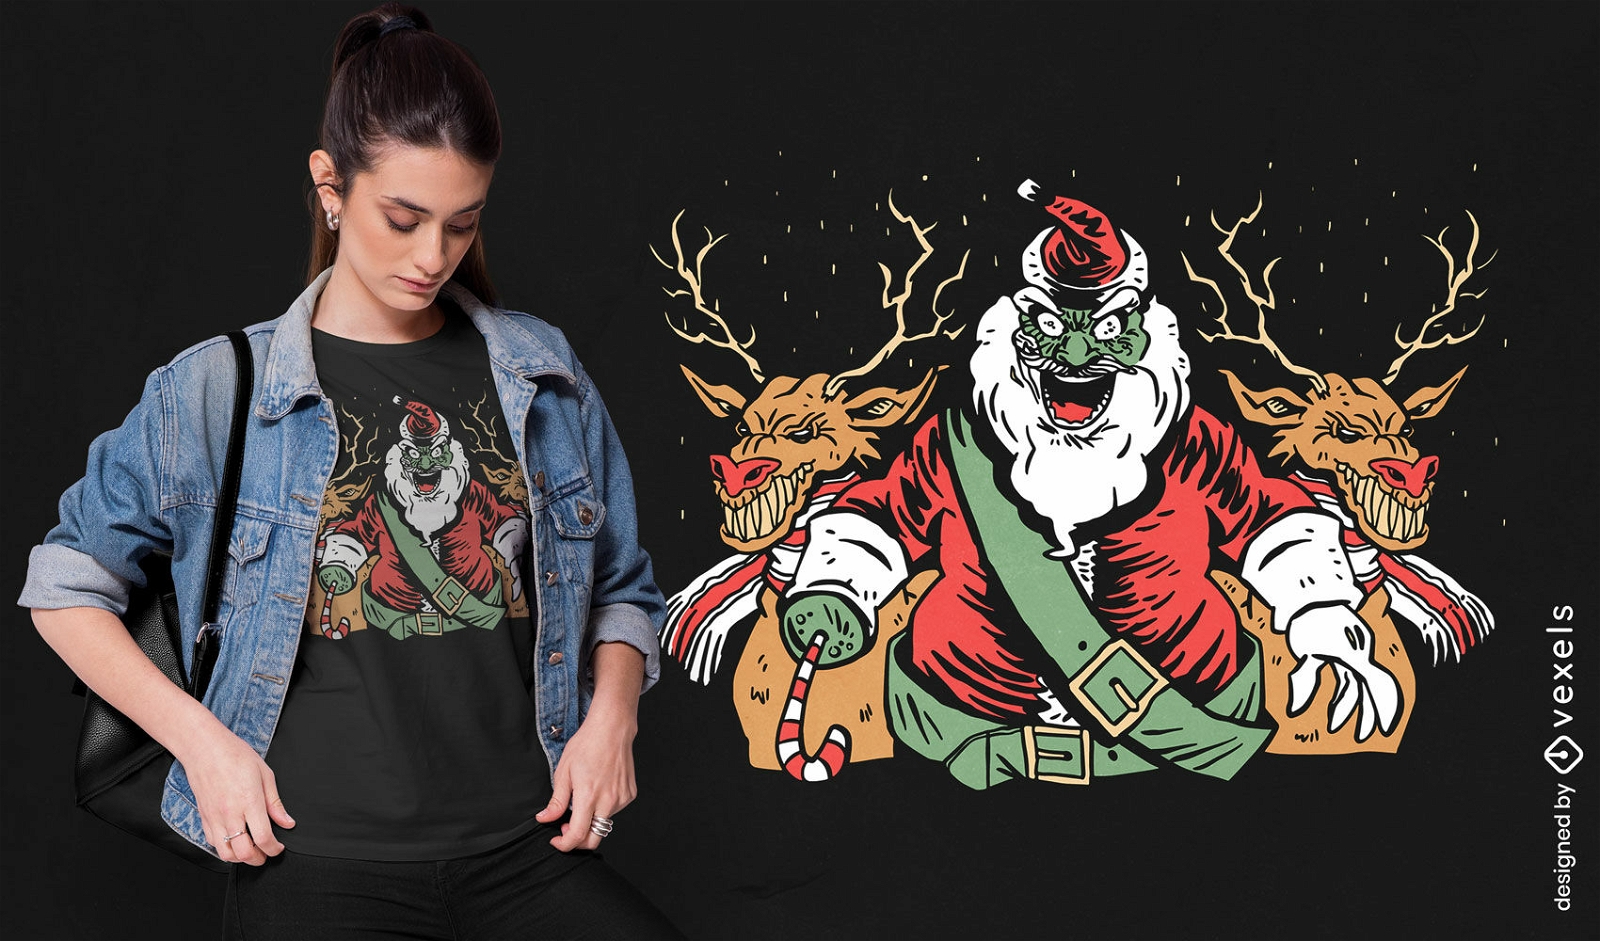 Creepy Santa anti - Dise?o de camiseta de Navidad